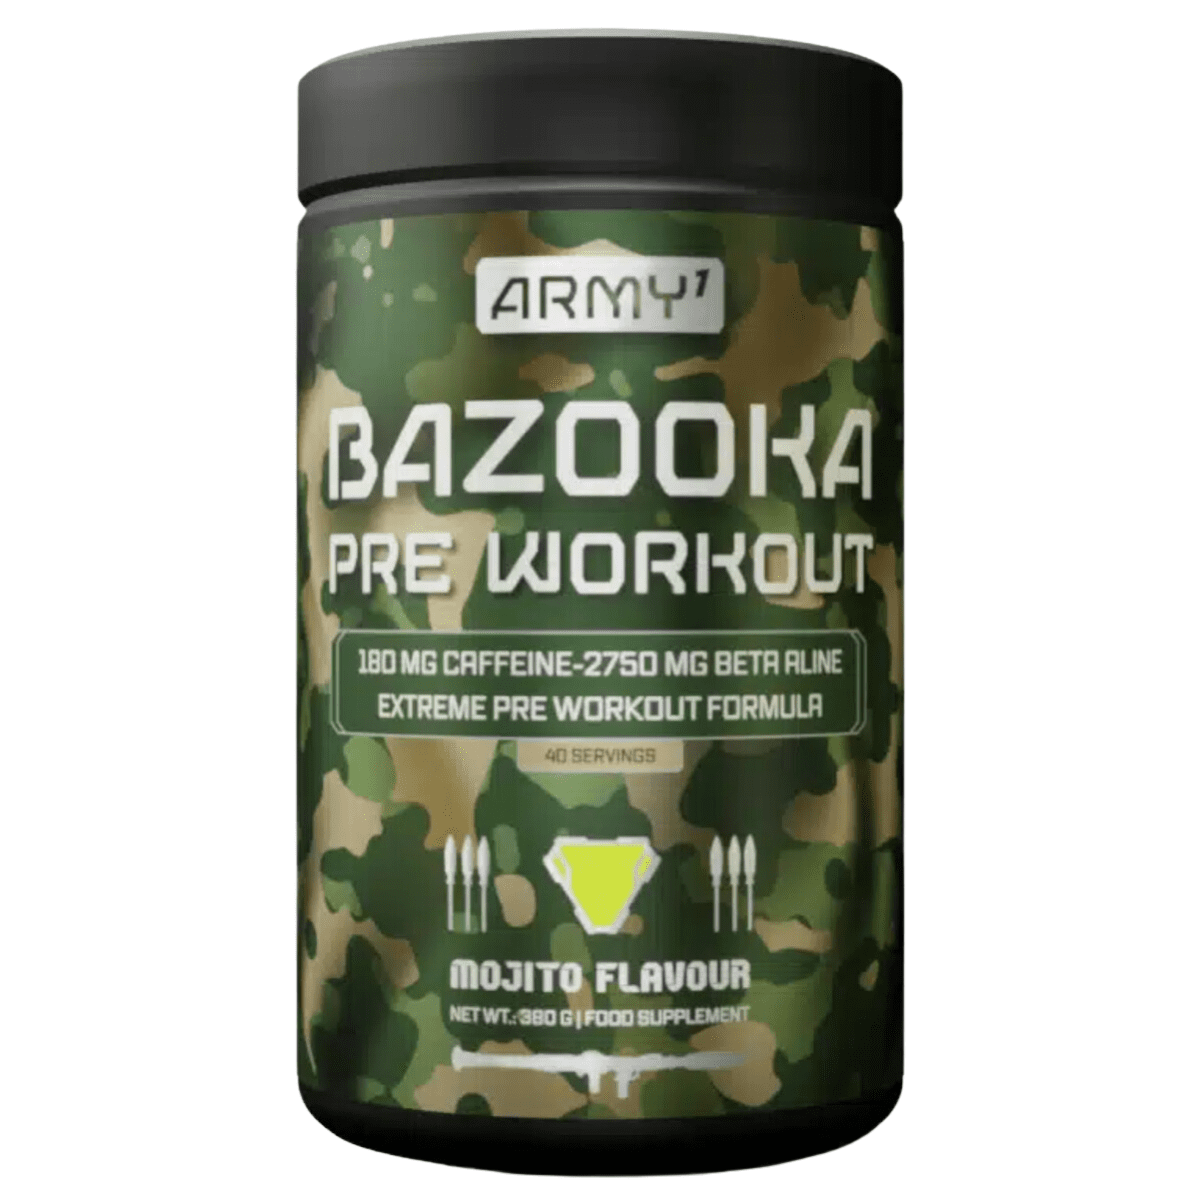 Army1 Bazooka Pre-Workout - 0